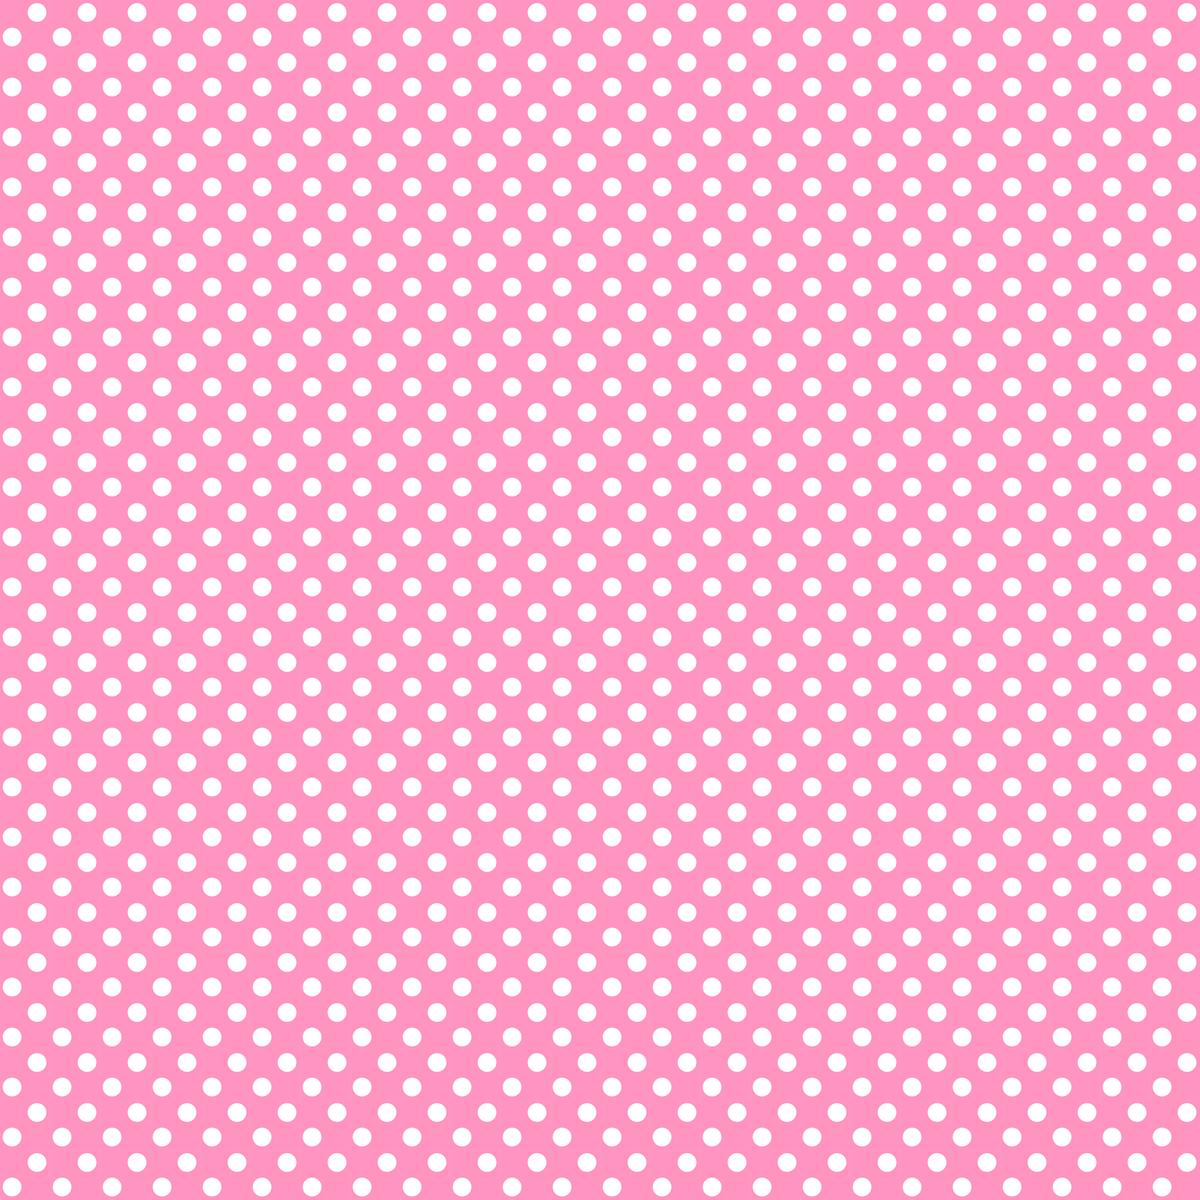 Free Digital Polka Dot Scrapbooking Papers - Pünktchenpapier - Free Printable Pink Polka Dot Paper